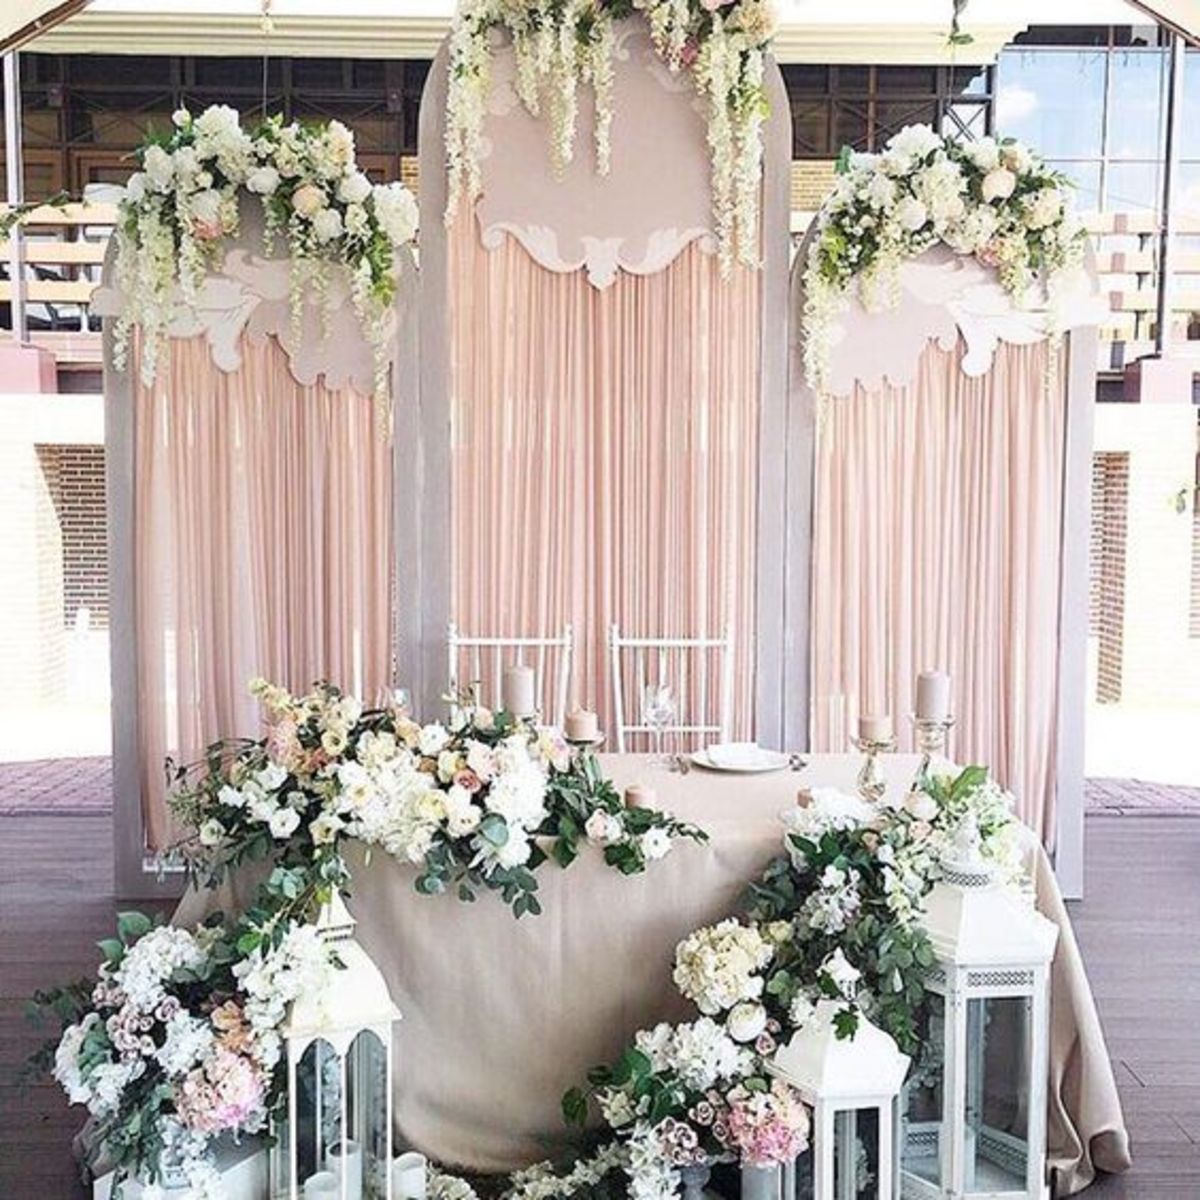 Floral wedding backdrop